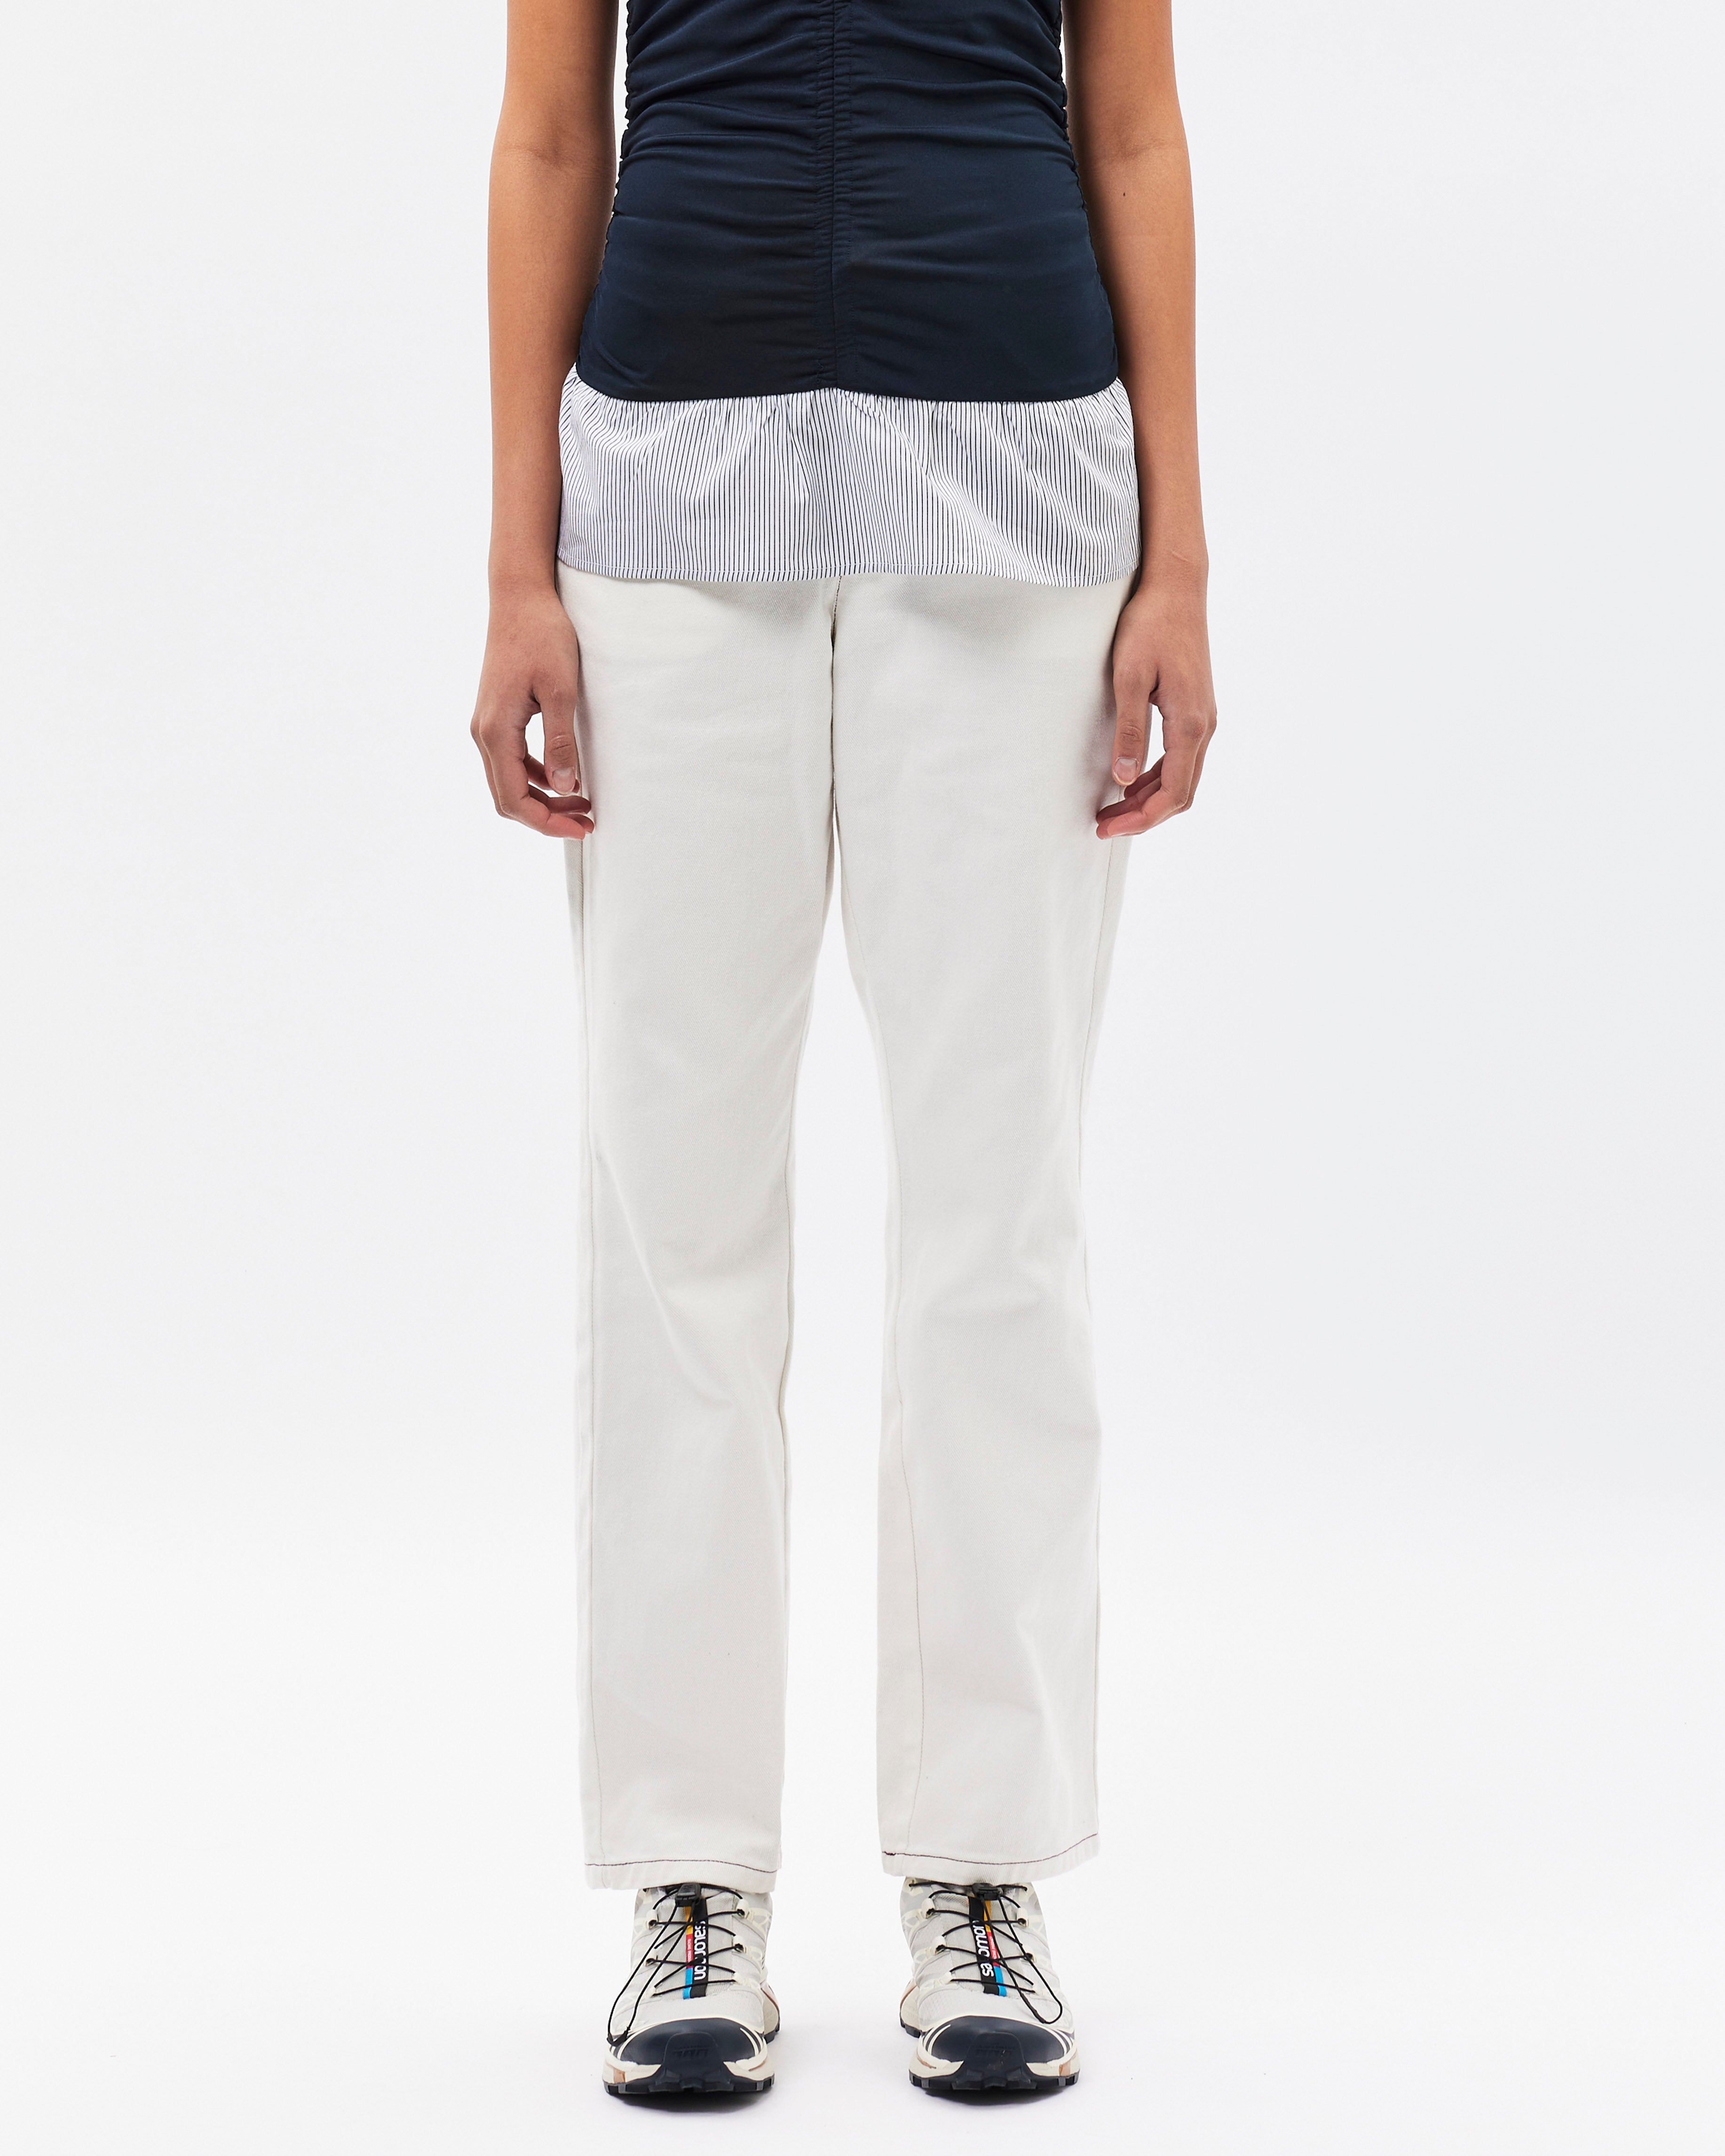 OpéraSPORT Finley Jeans WHITE M14-WHT